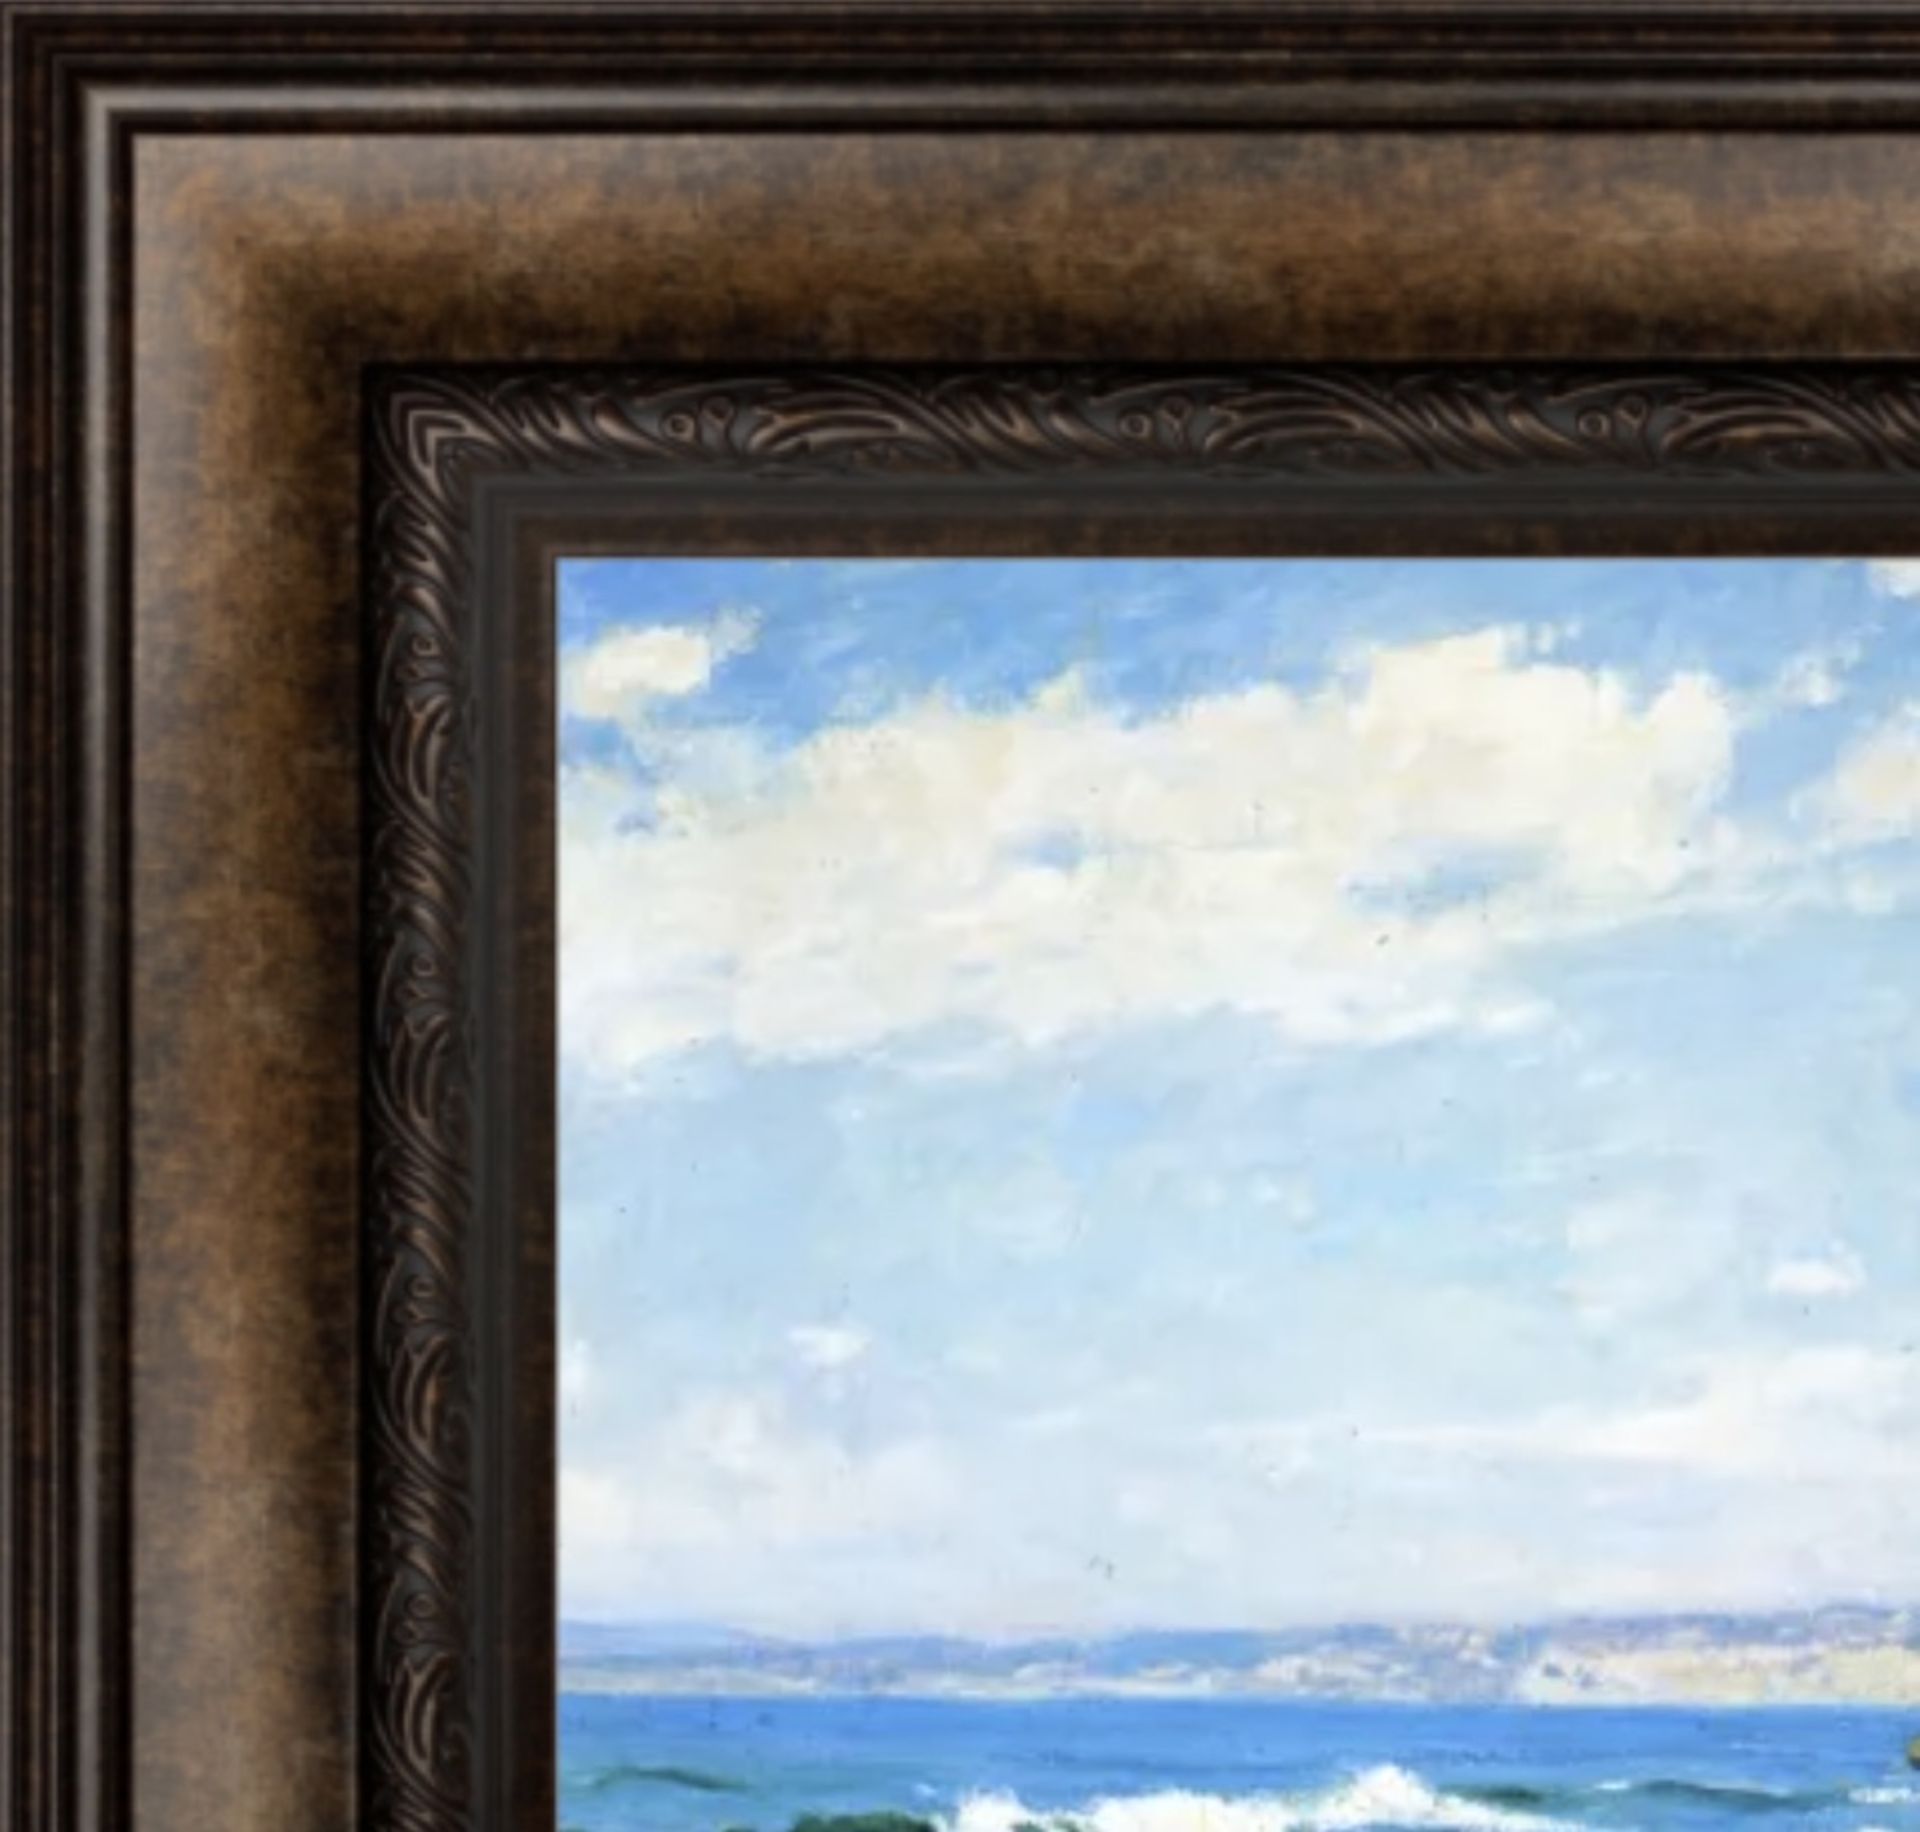 Guy Orlando Rose "La Jolla Beach" Painting - Image 4 of 5